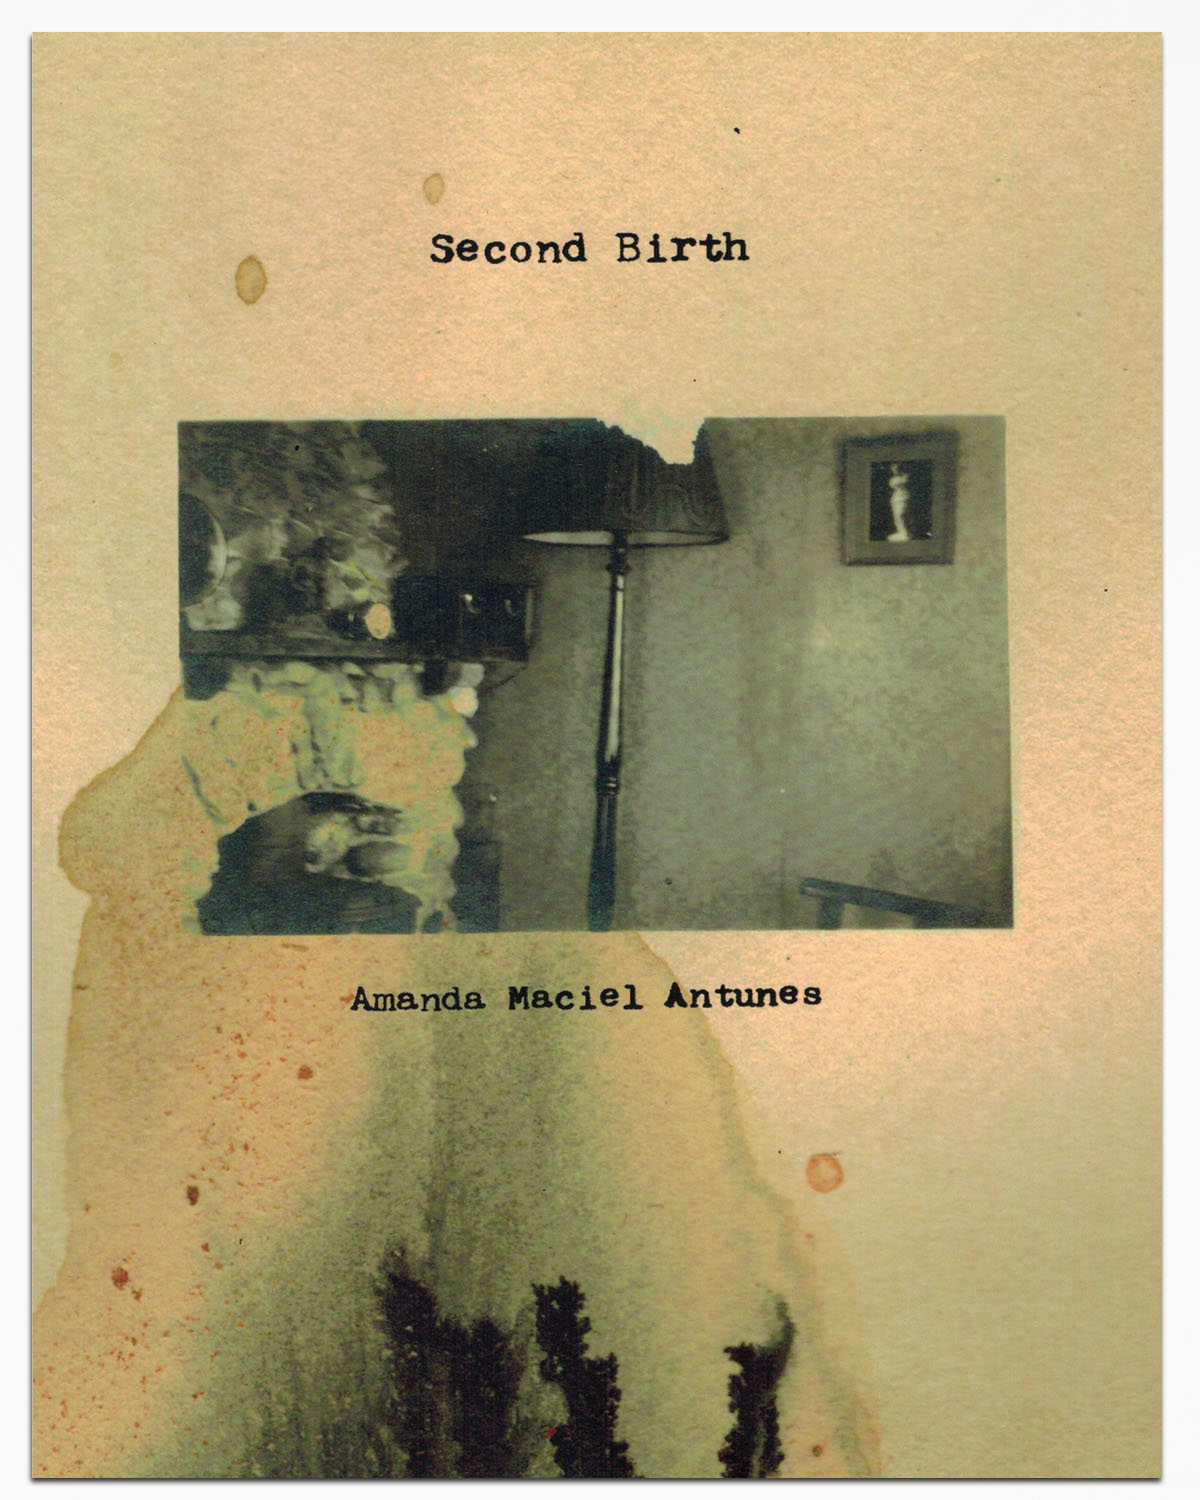 Amanda Maciel Antunes - Second Birth